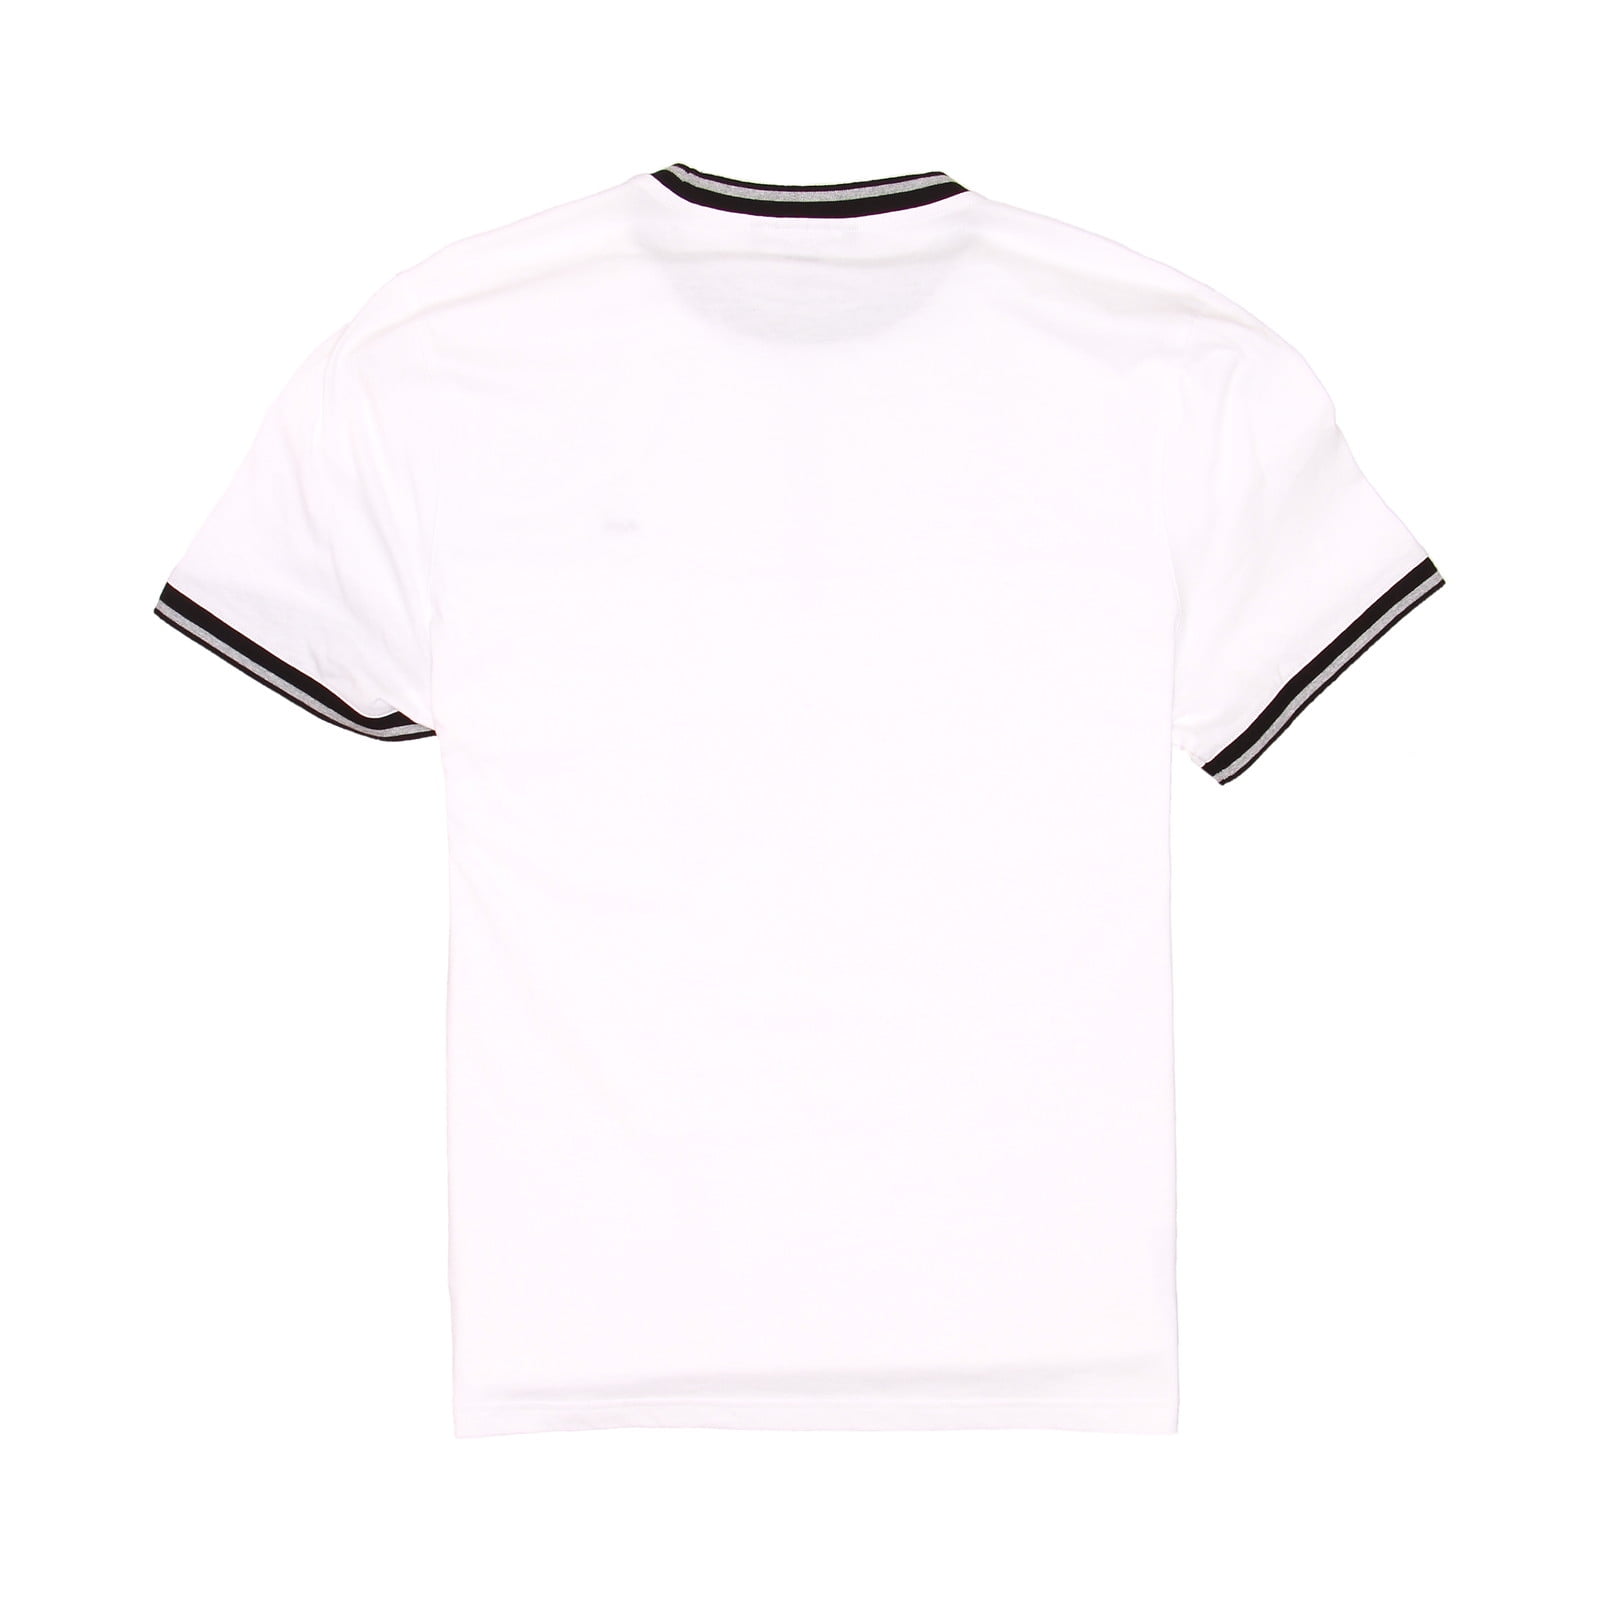 Michael Kors T-shirt Herren Farbe Weiss In White